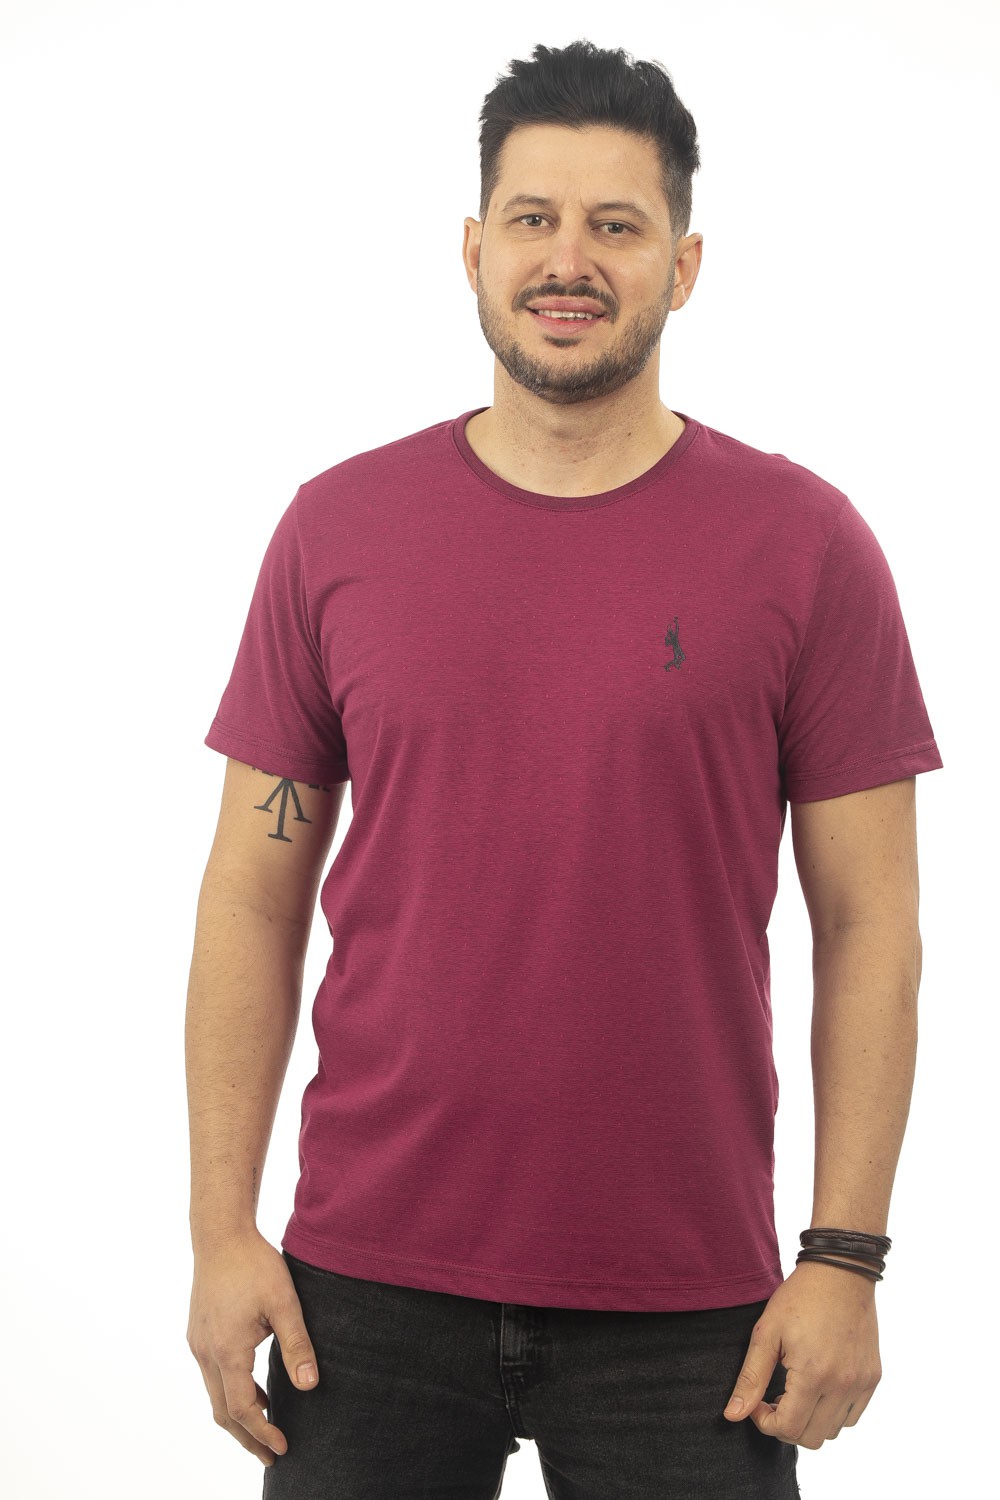 Camiseta Básica Jacquard Vermelha Vinho/Chumbo